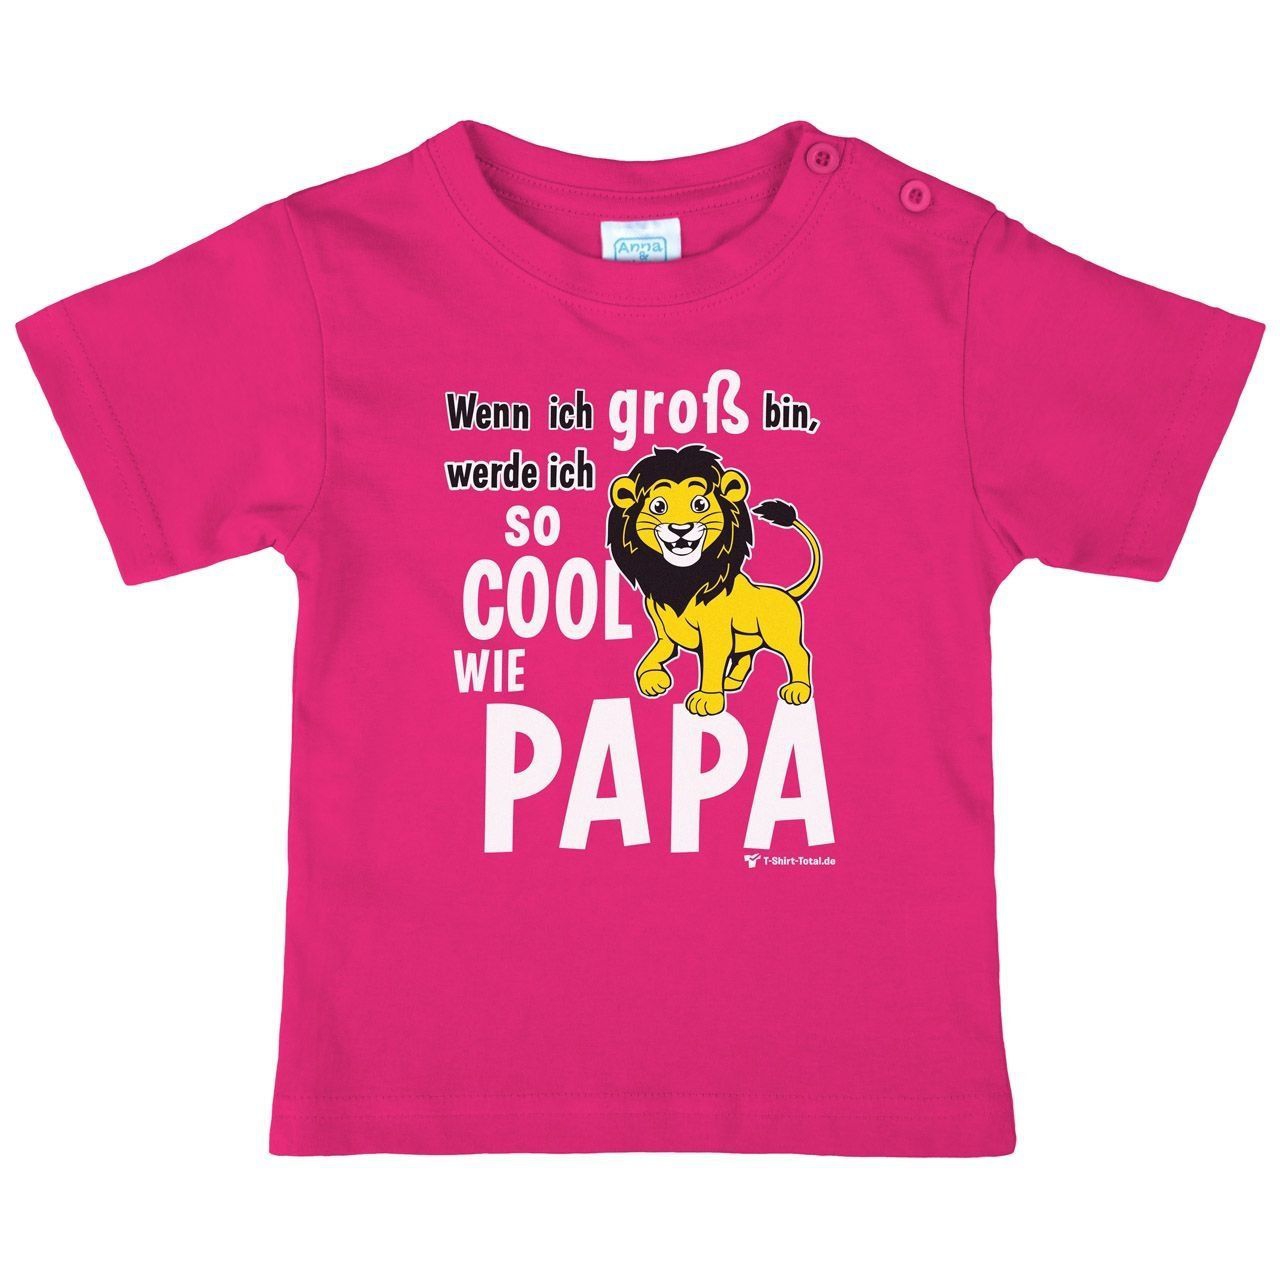 Cool wie Papa Löwe Kinder T-Shirt pink 68 / 74